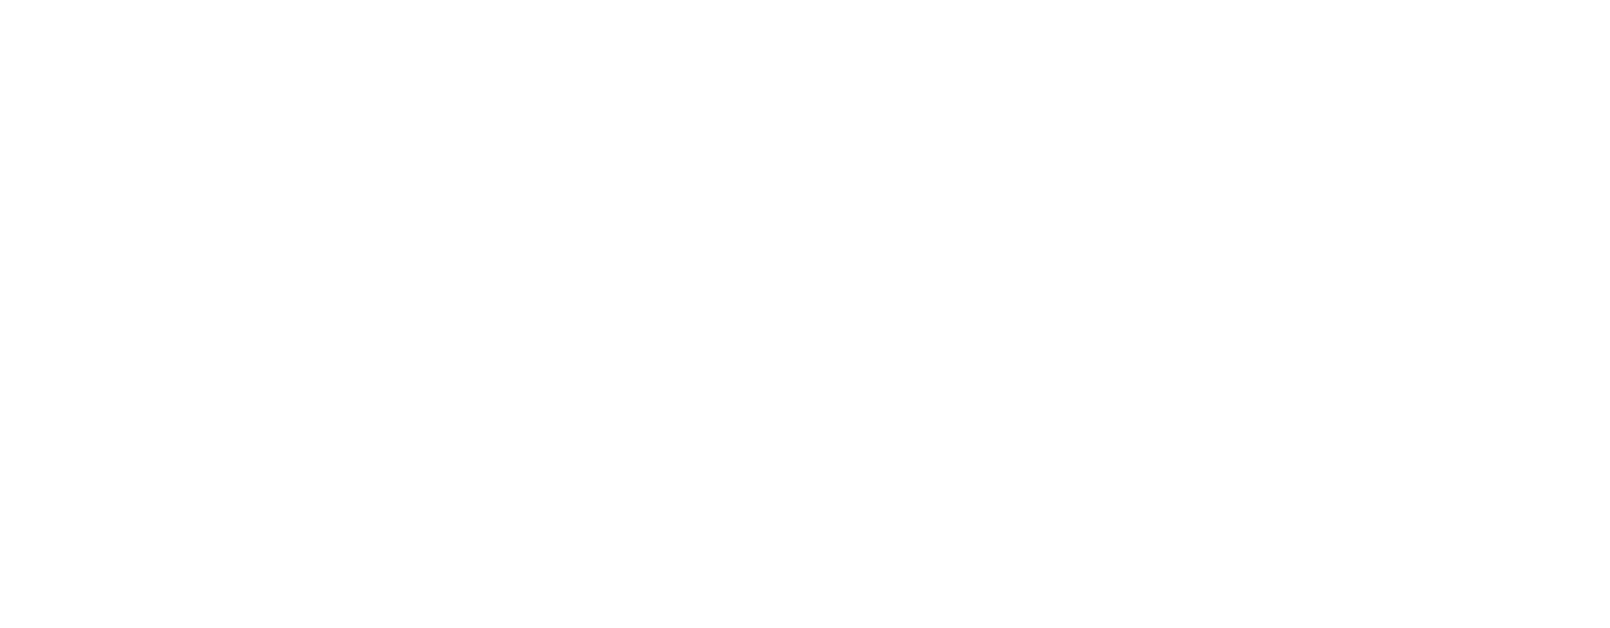 Legacy Toastmasters Club